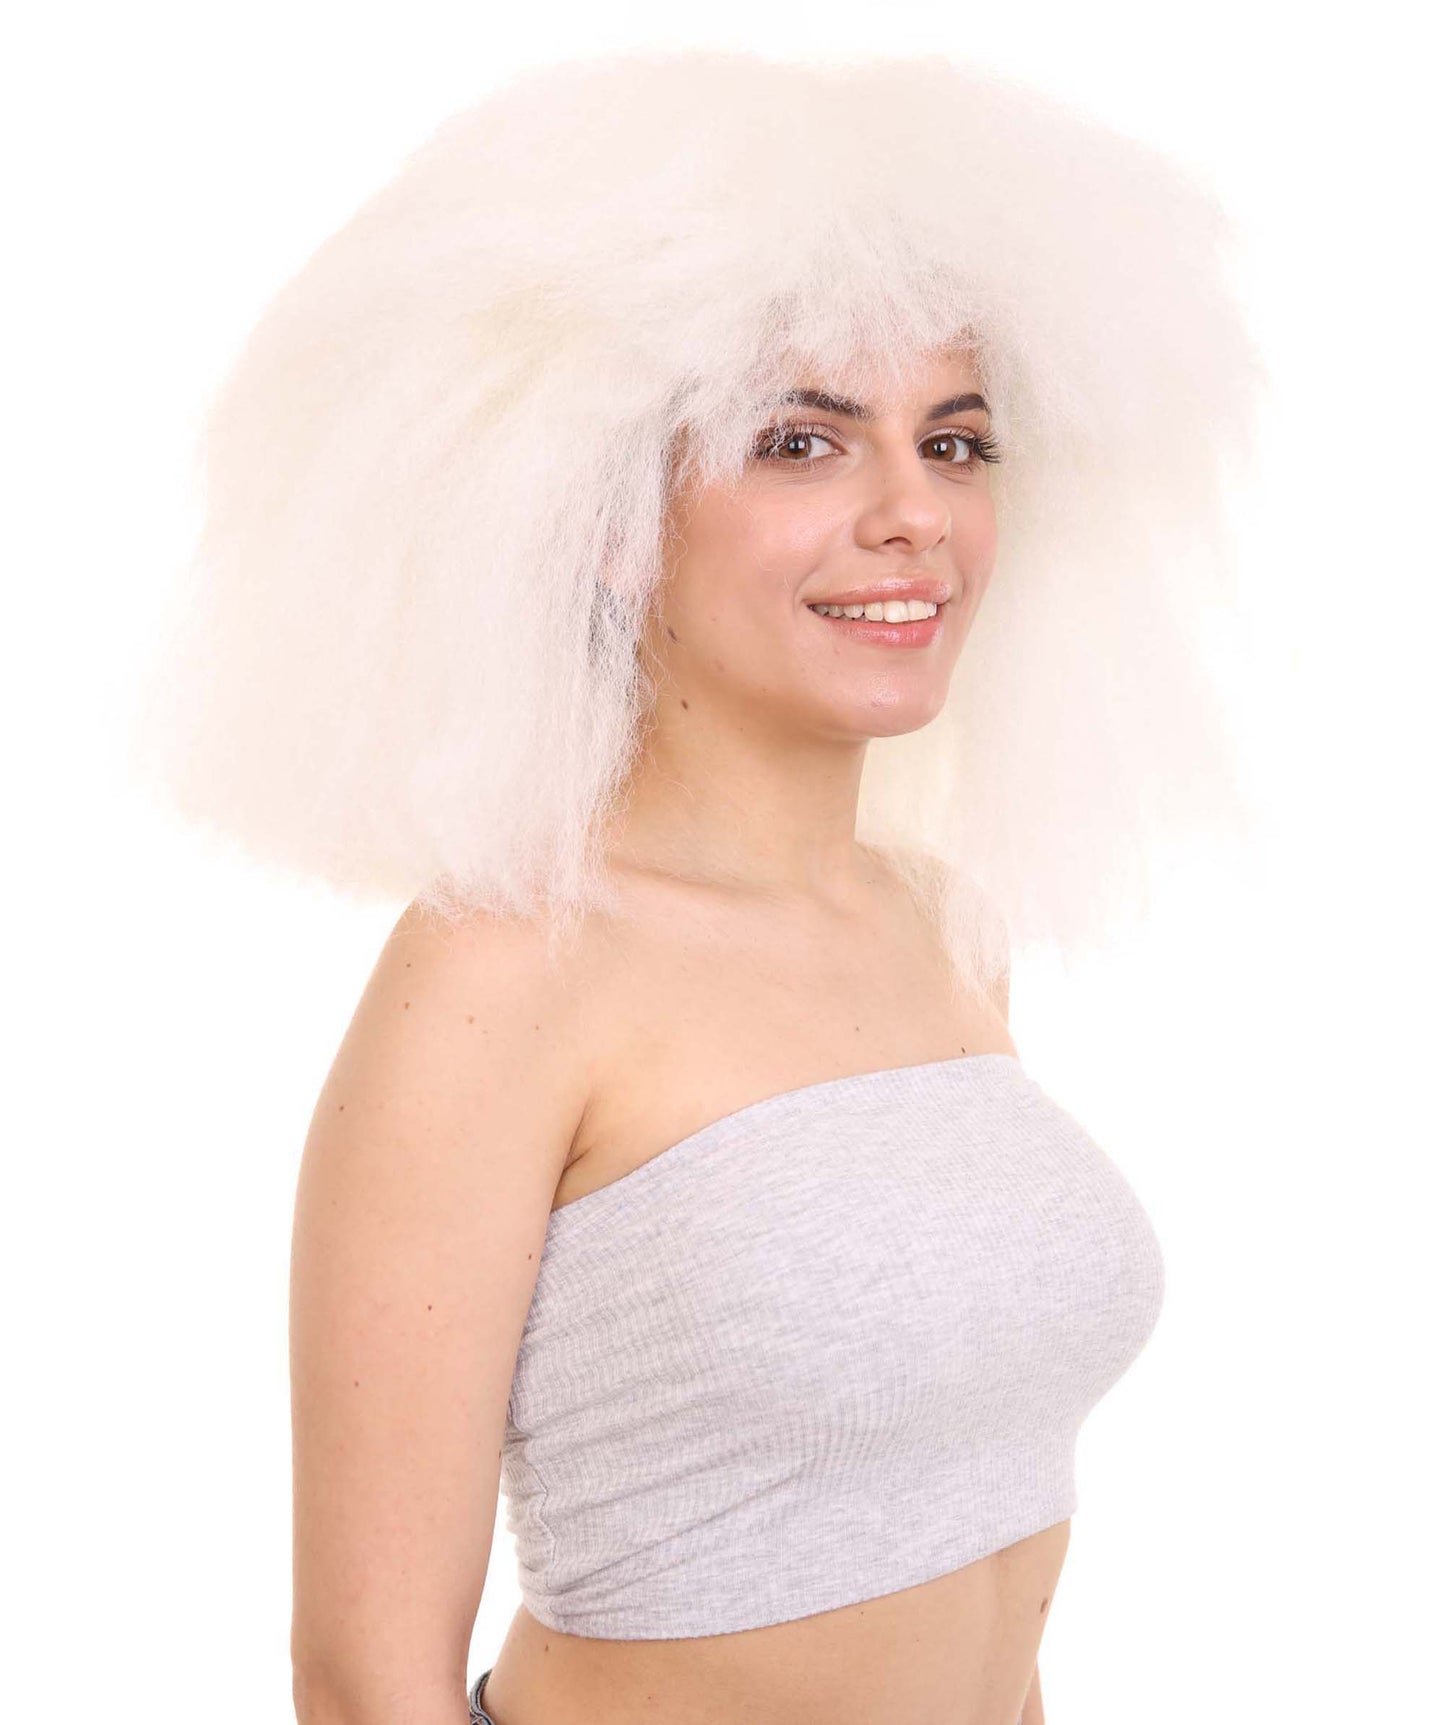 Extra Large Australian Singer Bob Women's Wig | White Pop Star | Premium Breathable Capless Cap